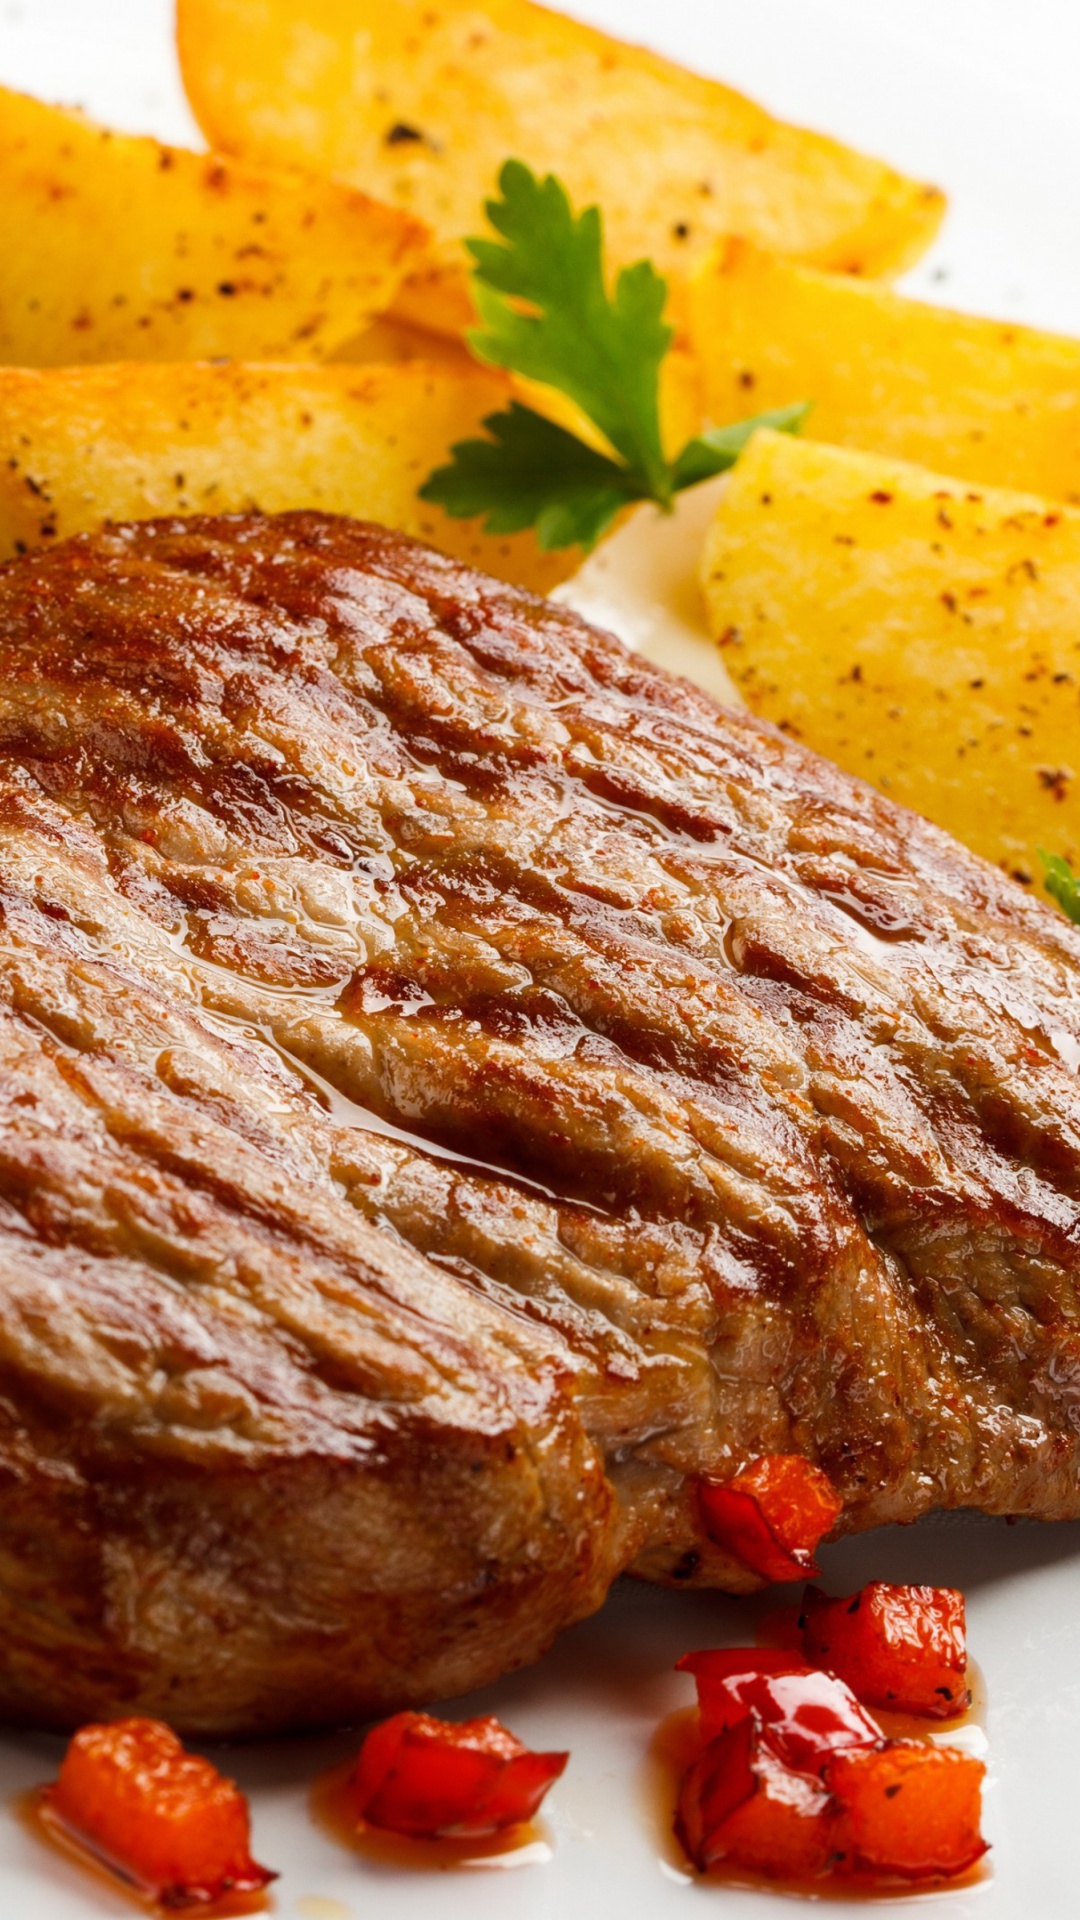 Steak and potatoes wallpaper 1080x1920